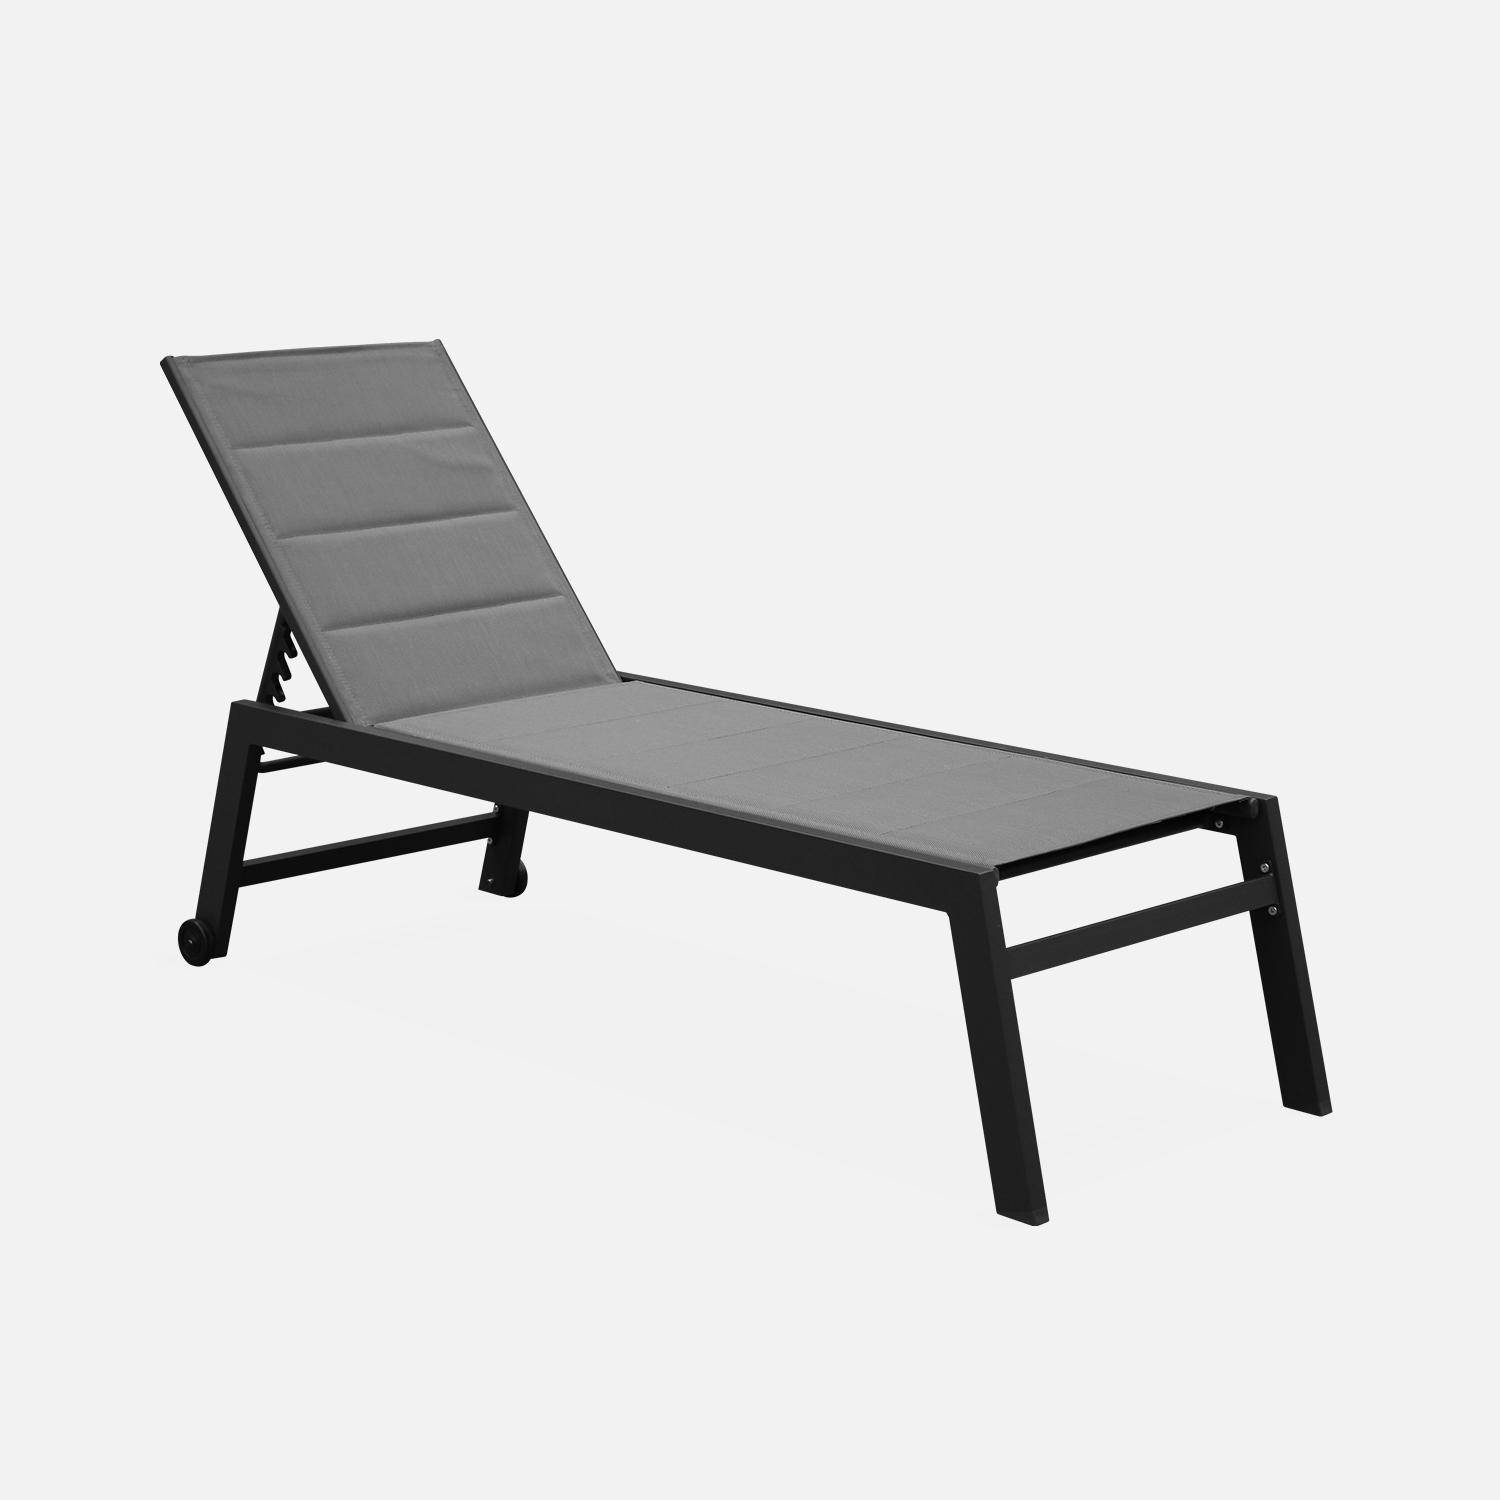 Sun lounger - Solis - Textilene and aluminium sun lounger with 6 positions, anthracite grey frame, grey textilene,sweeek,Photo3